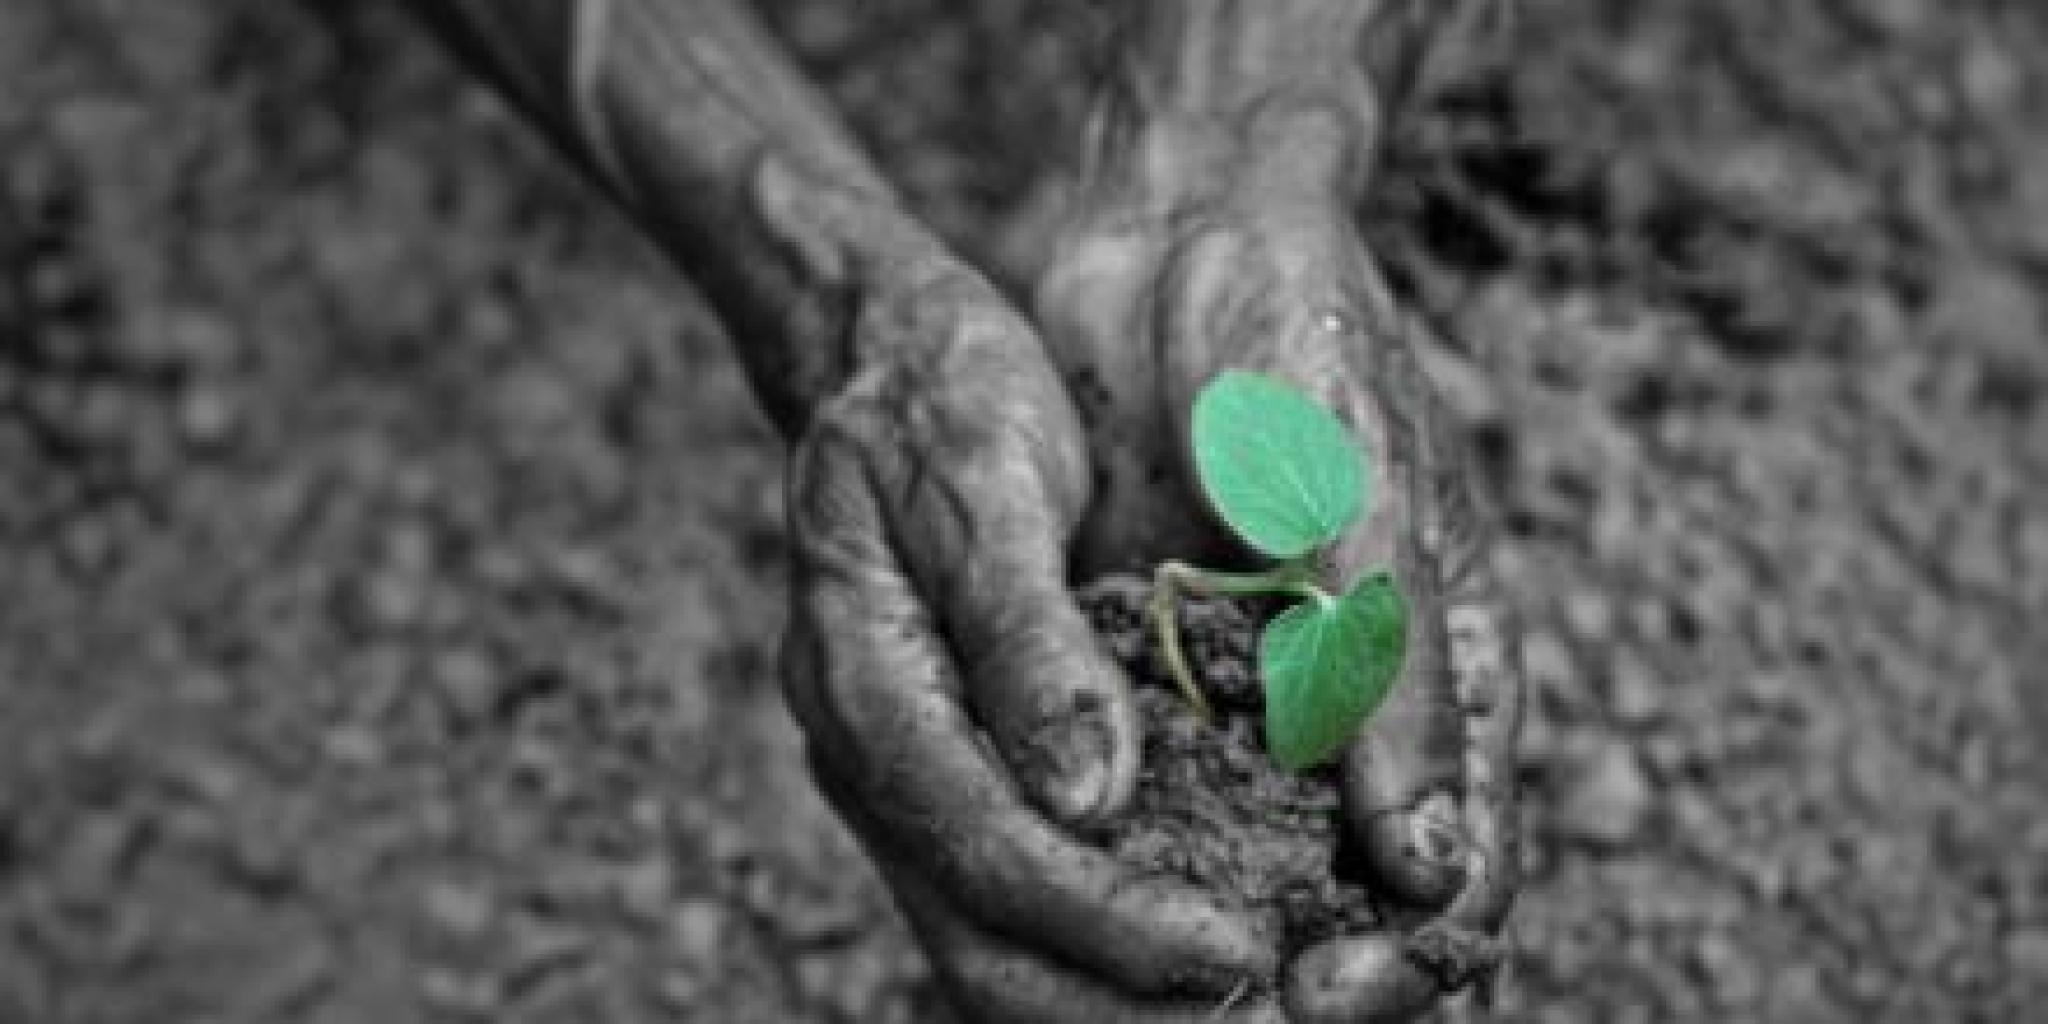 Image of seedlings in hands by kavya_adiga at Pixahive https://pixahive.com/photo/seedlings-in-the-hands/ (CC0) 